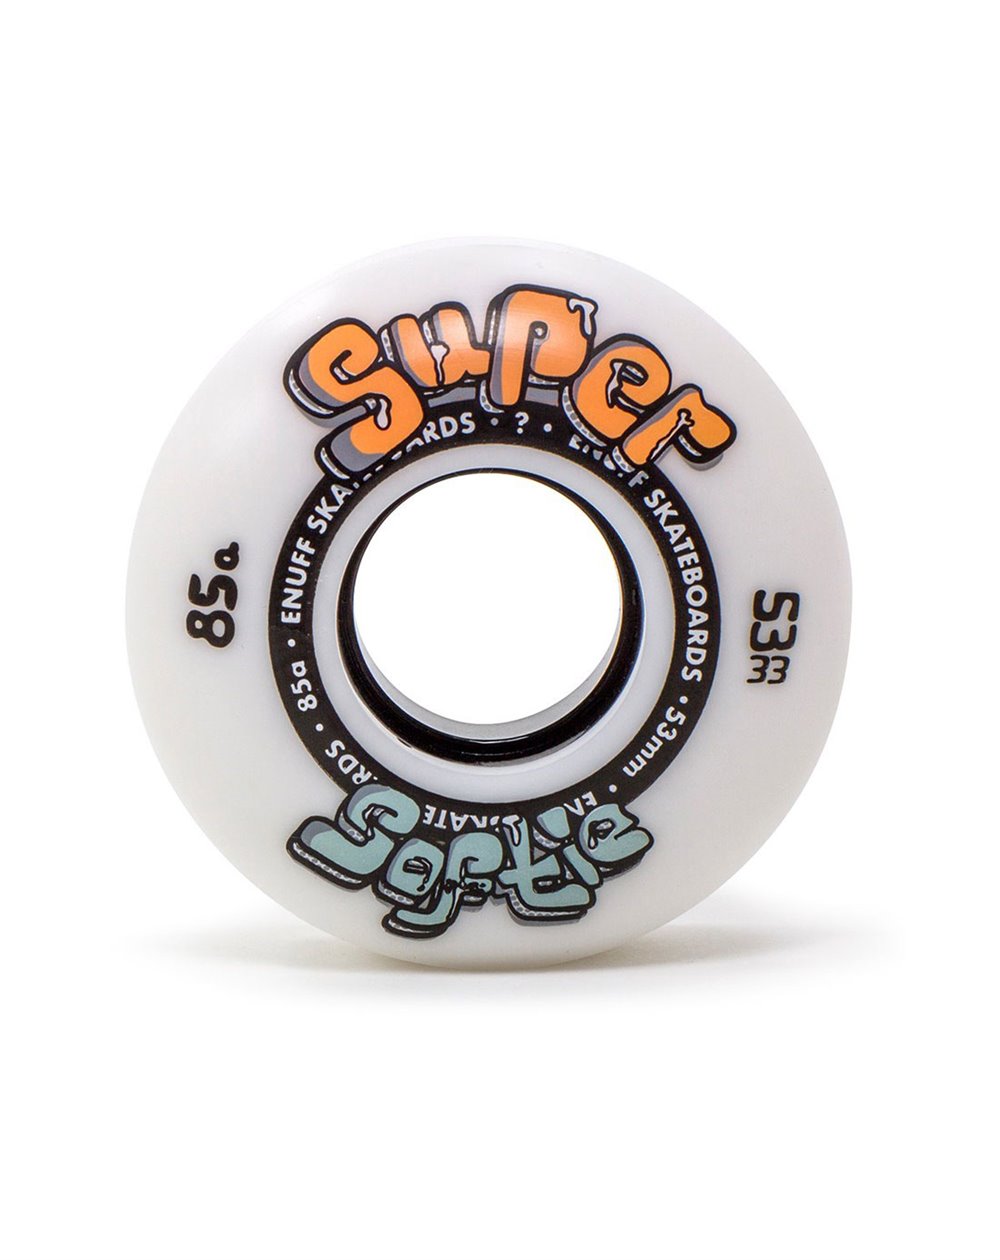 Enuff Roues Skateboard Super Softie 53mm 85A White 4 pc